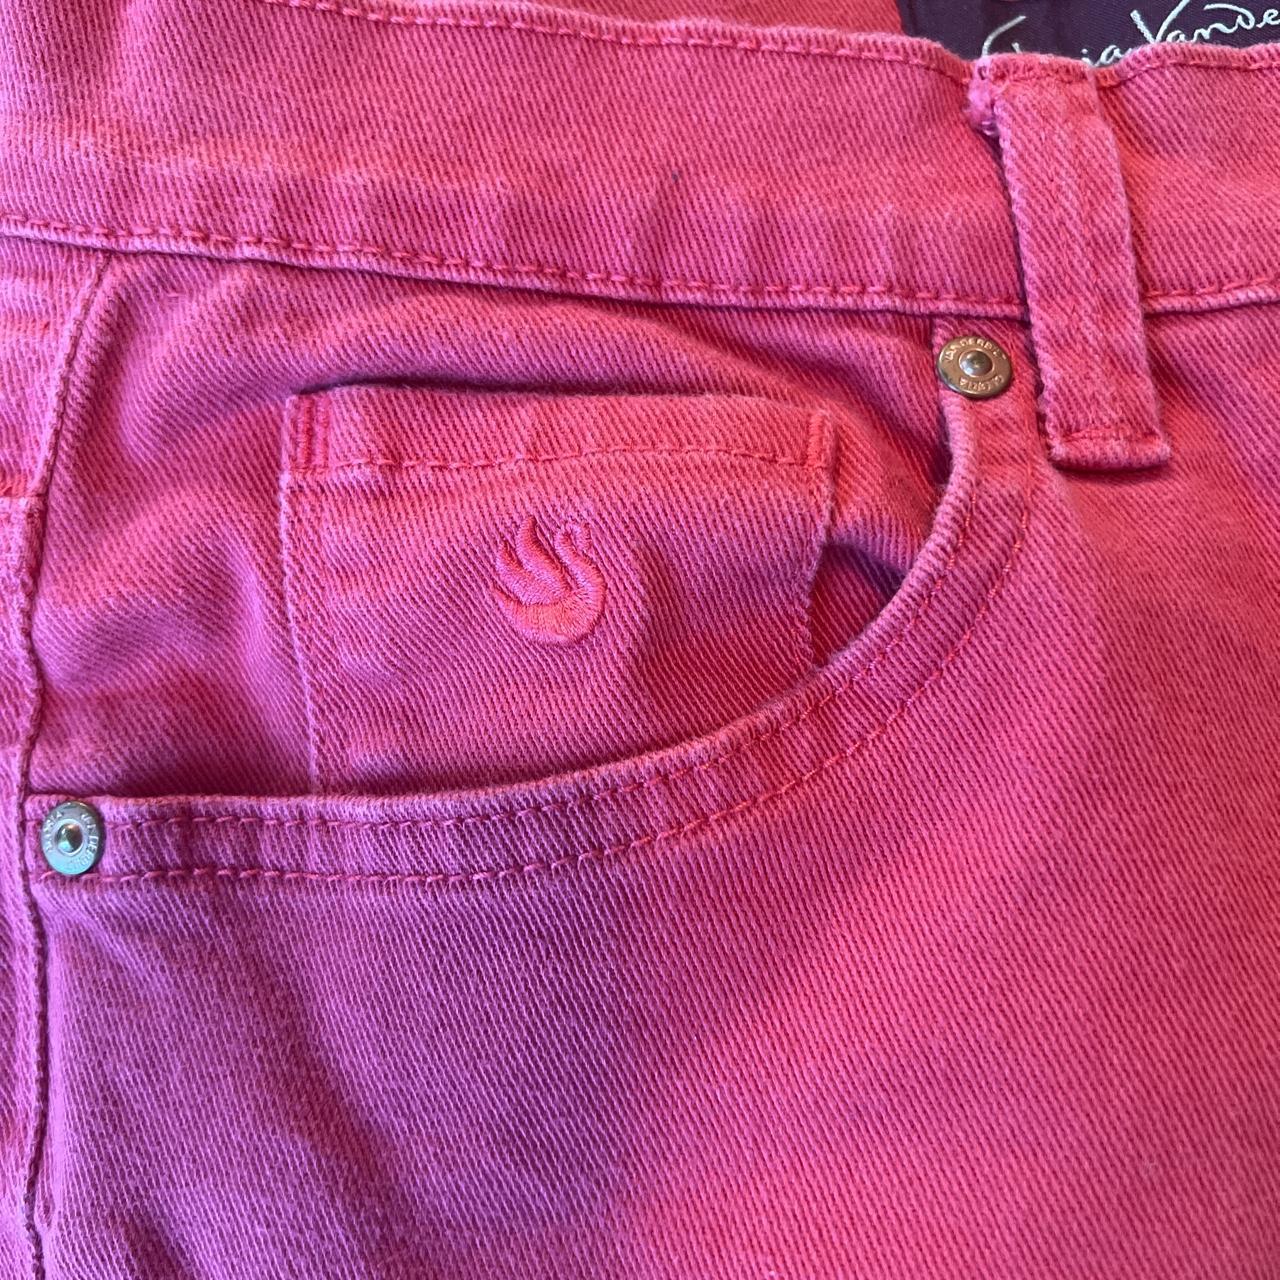 Gloria Vanderbilt light red jeans, size 10 petite